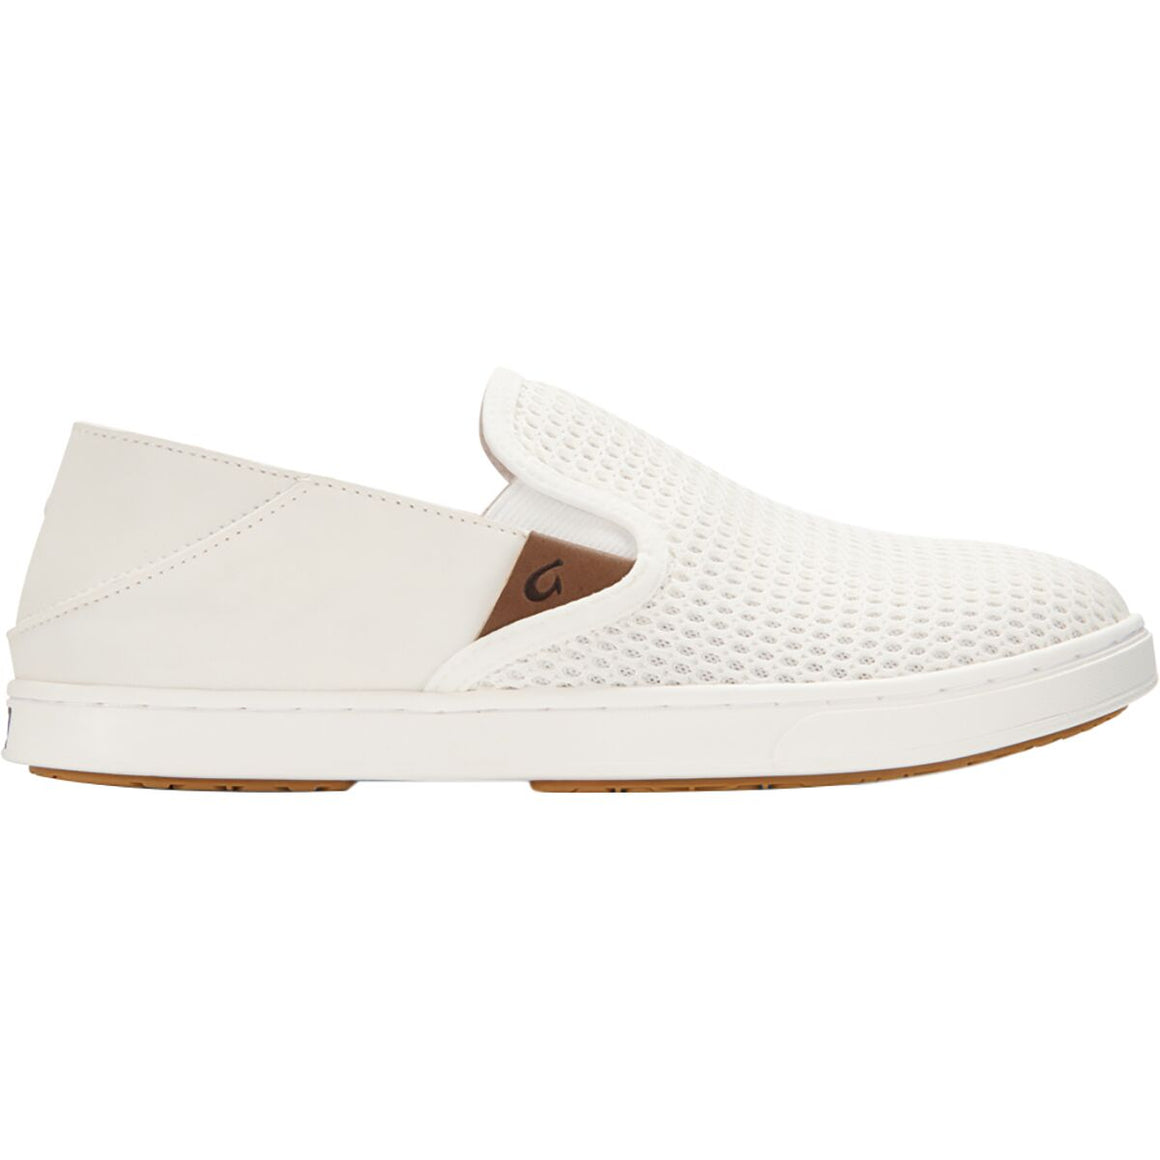 Olukai Women's Pehuea Mesh Slip On Shoe - Bright White/Bright White 20271-WBWB